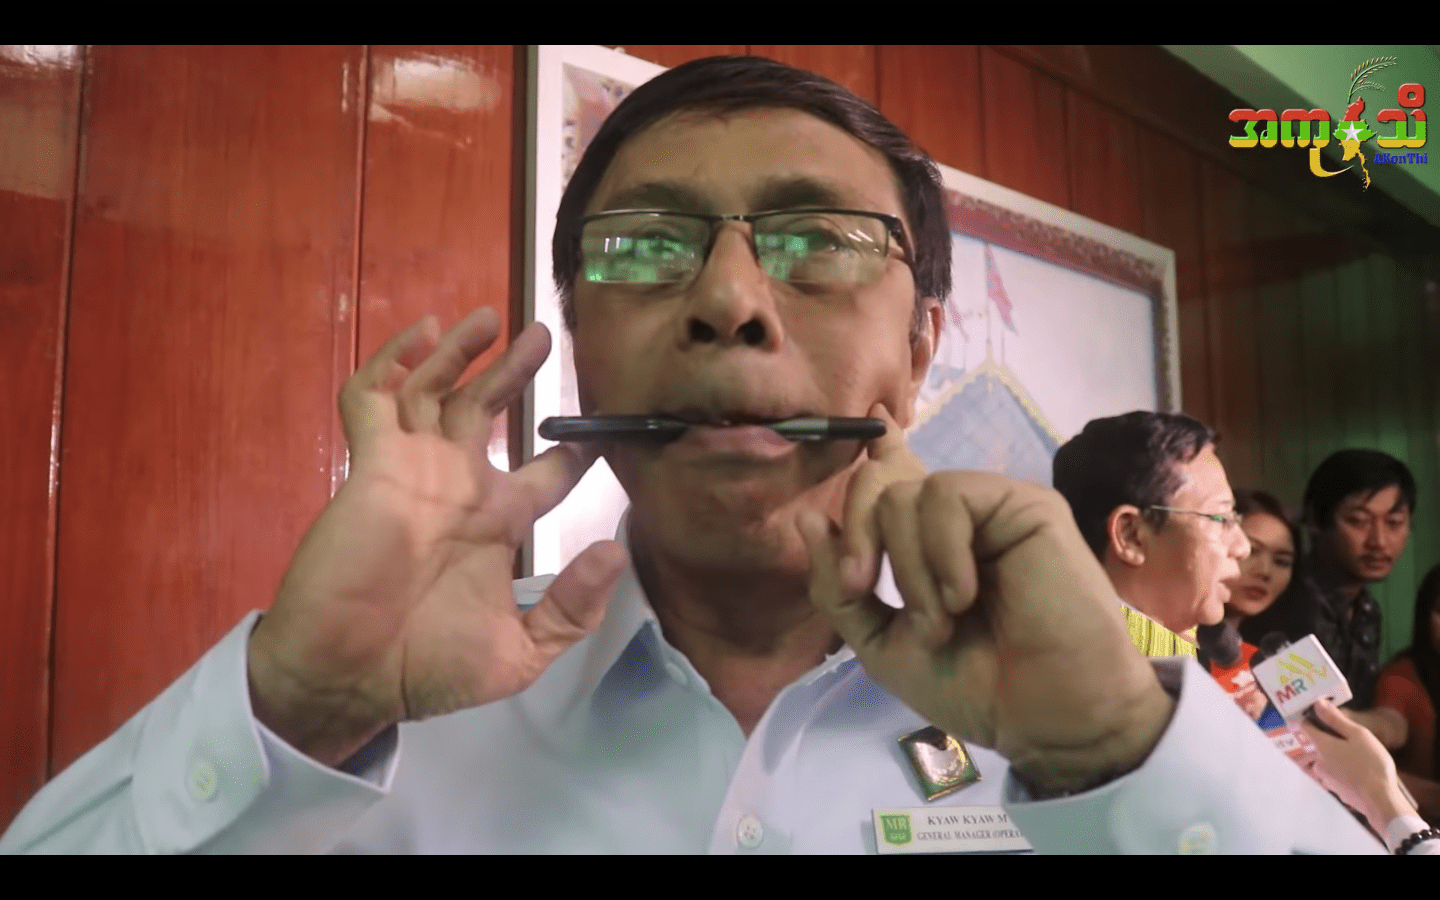 Myanmar Railways General Manager U Kyaw Kyaw Moe demonstrating how to smile with a pen – screengrab via Akonthi video